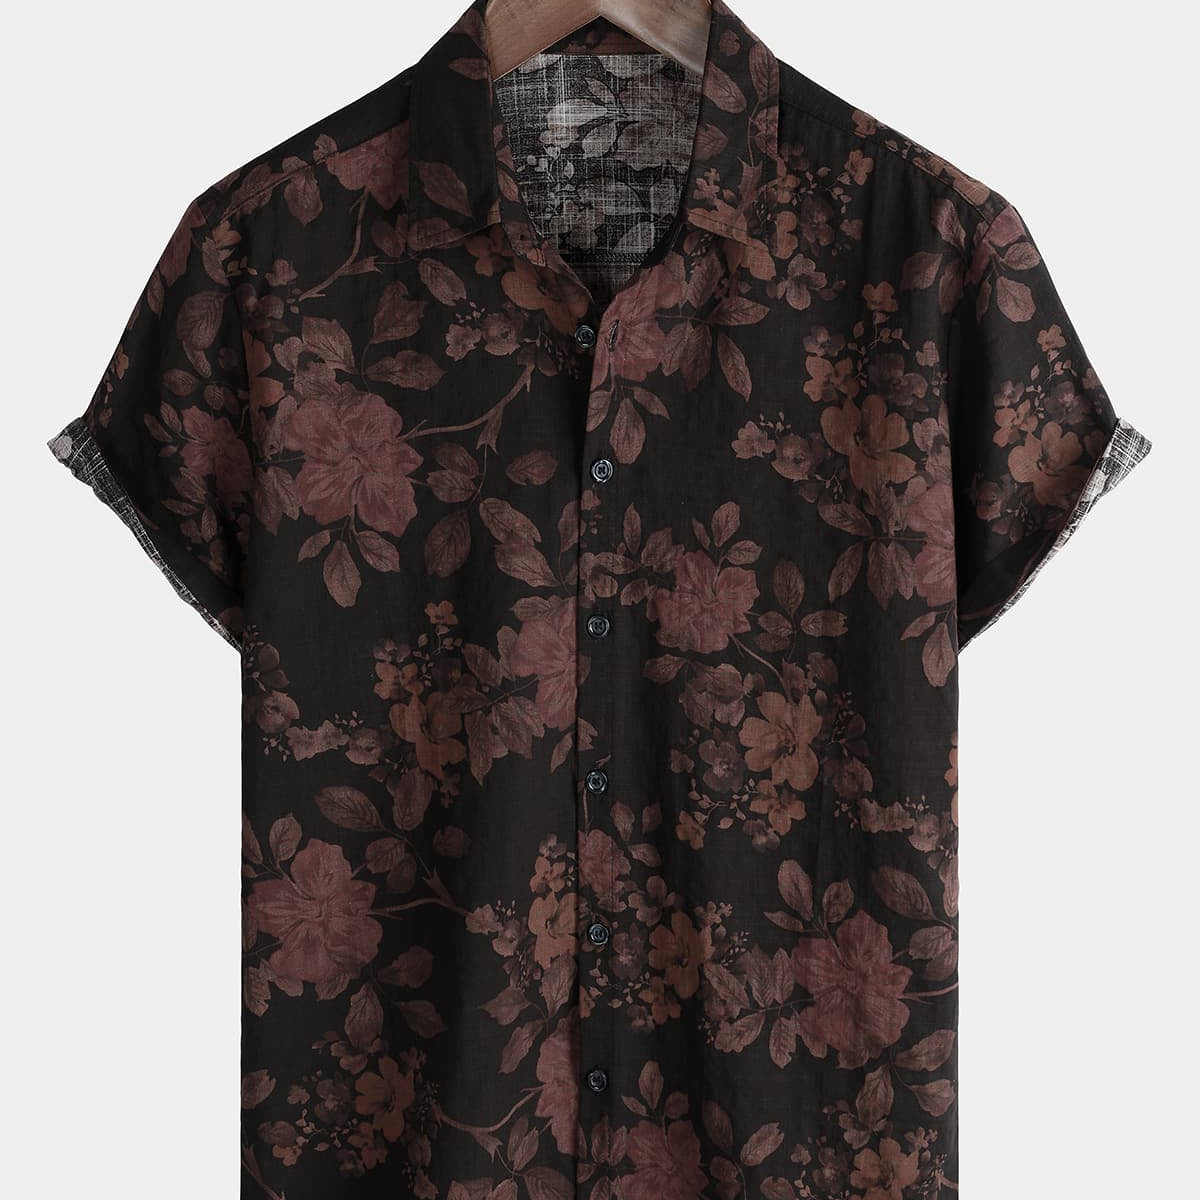 Men's Floral Vintage Short Sleeve Summer Cotton Button Up Black Shirt